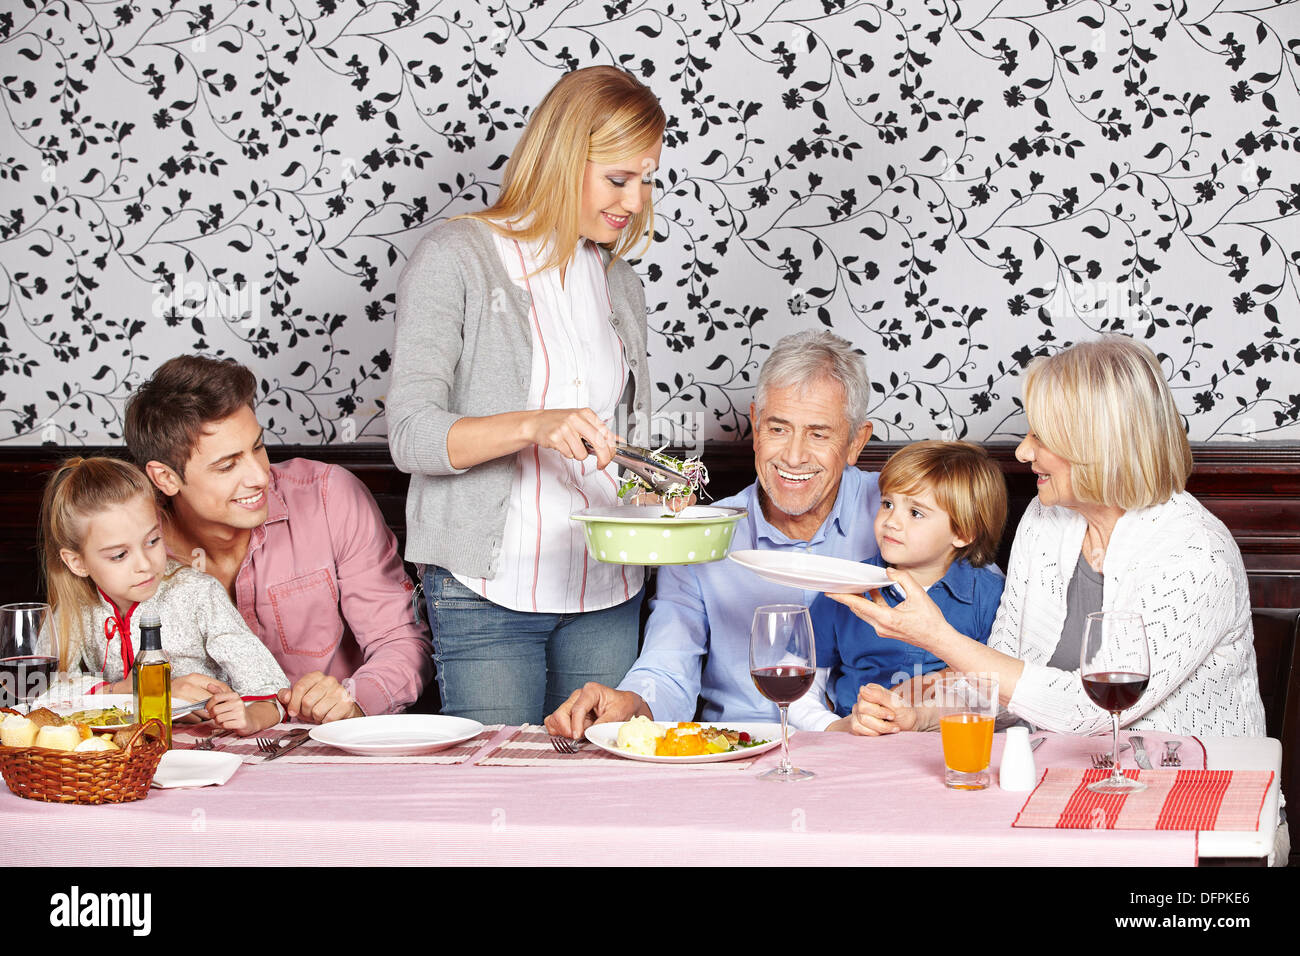 Madre sirviendo comida sana a su familia en la mesa Foto de stock